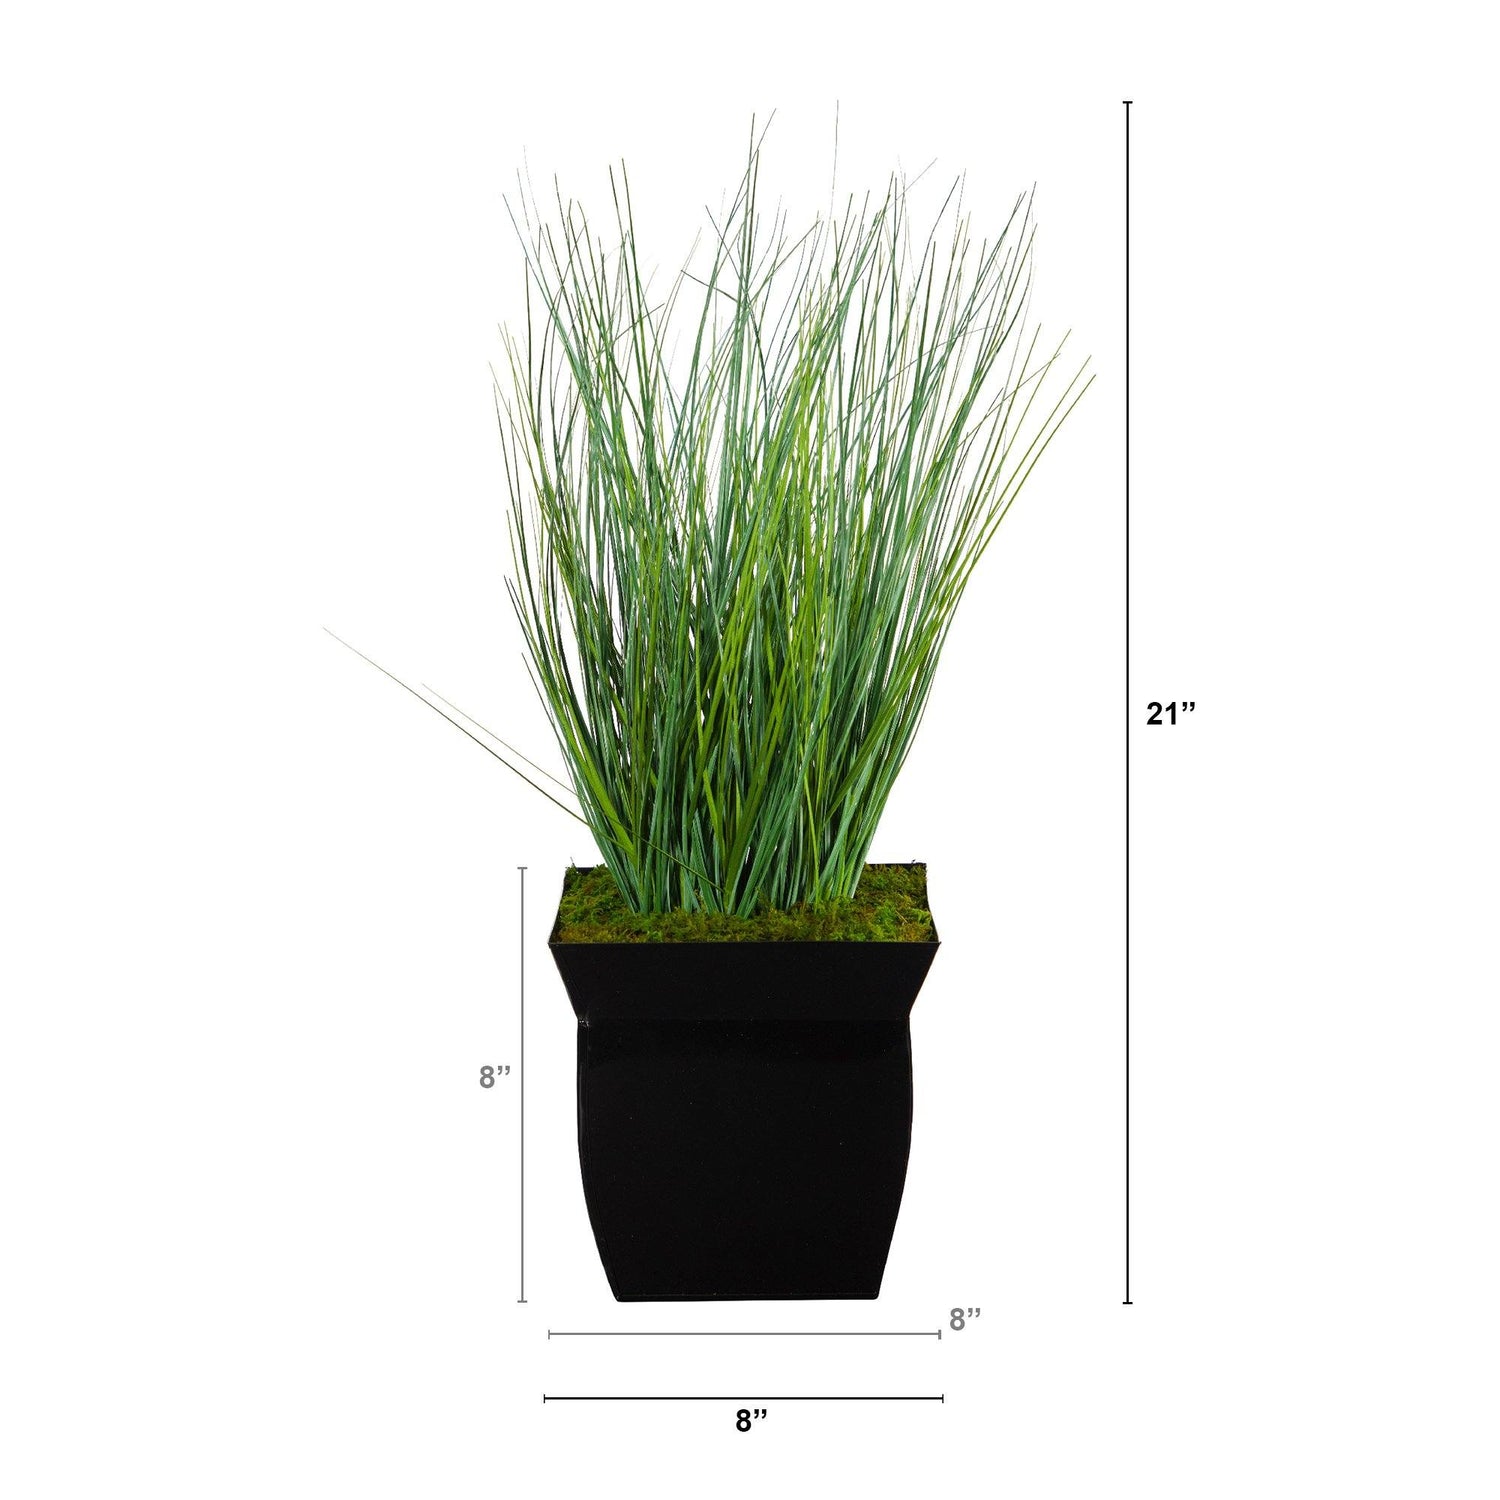 21” Onion Grass Artificial Plant in Black Metal Planter